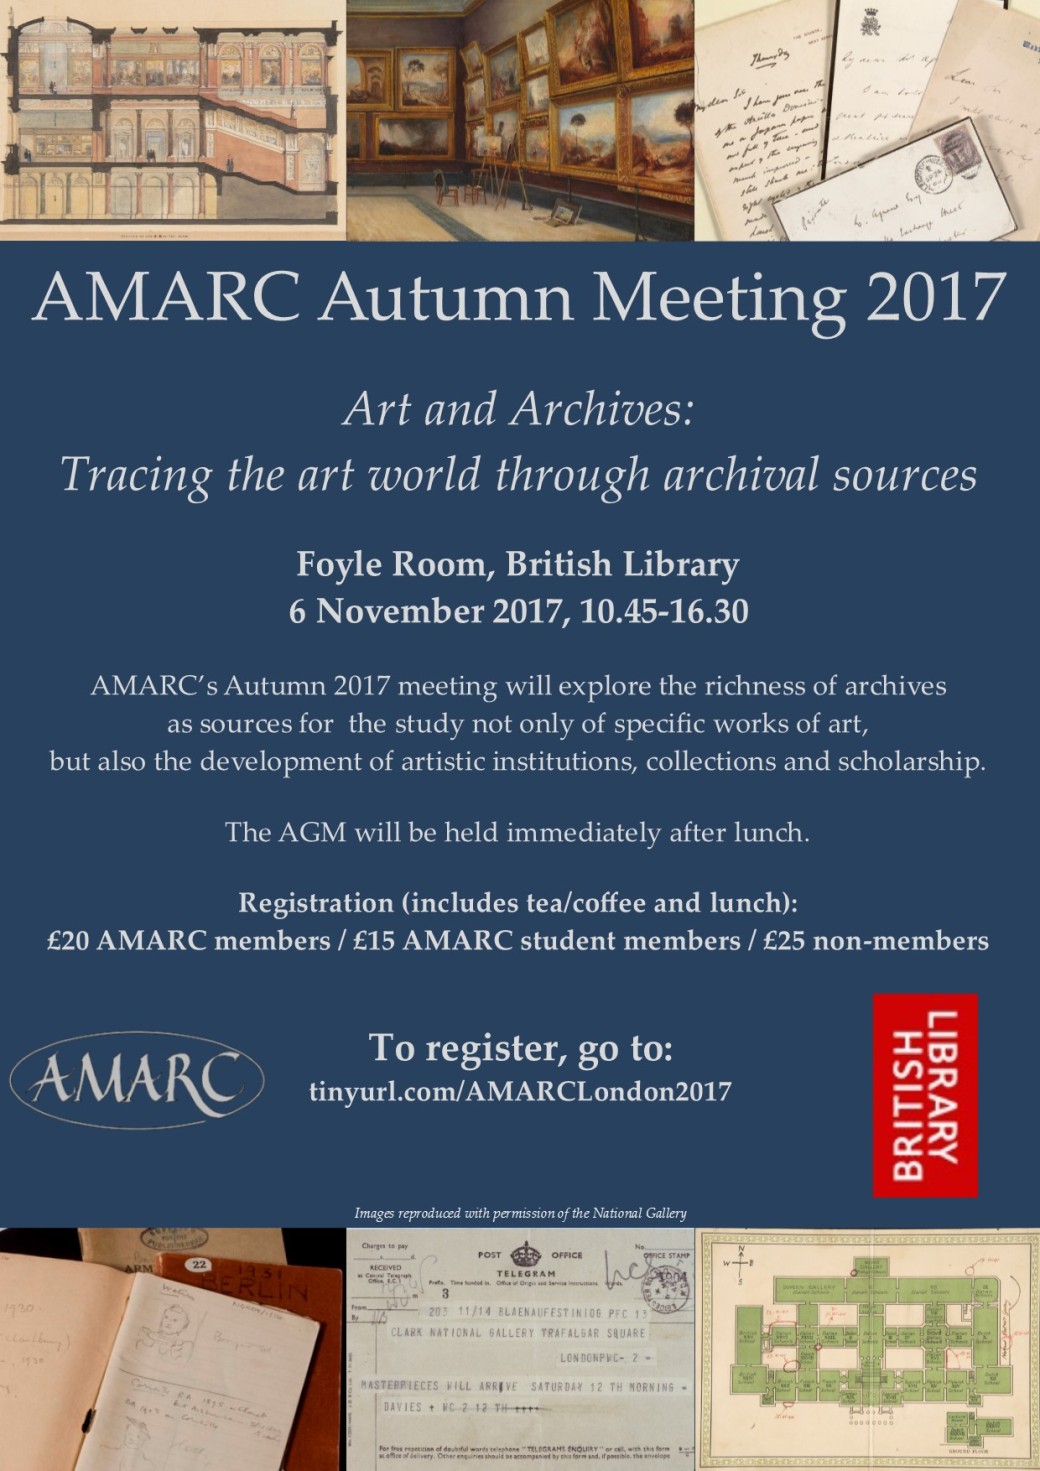 AMARC Autumn Meeting 2017 poster